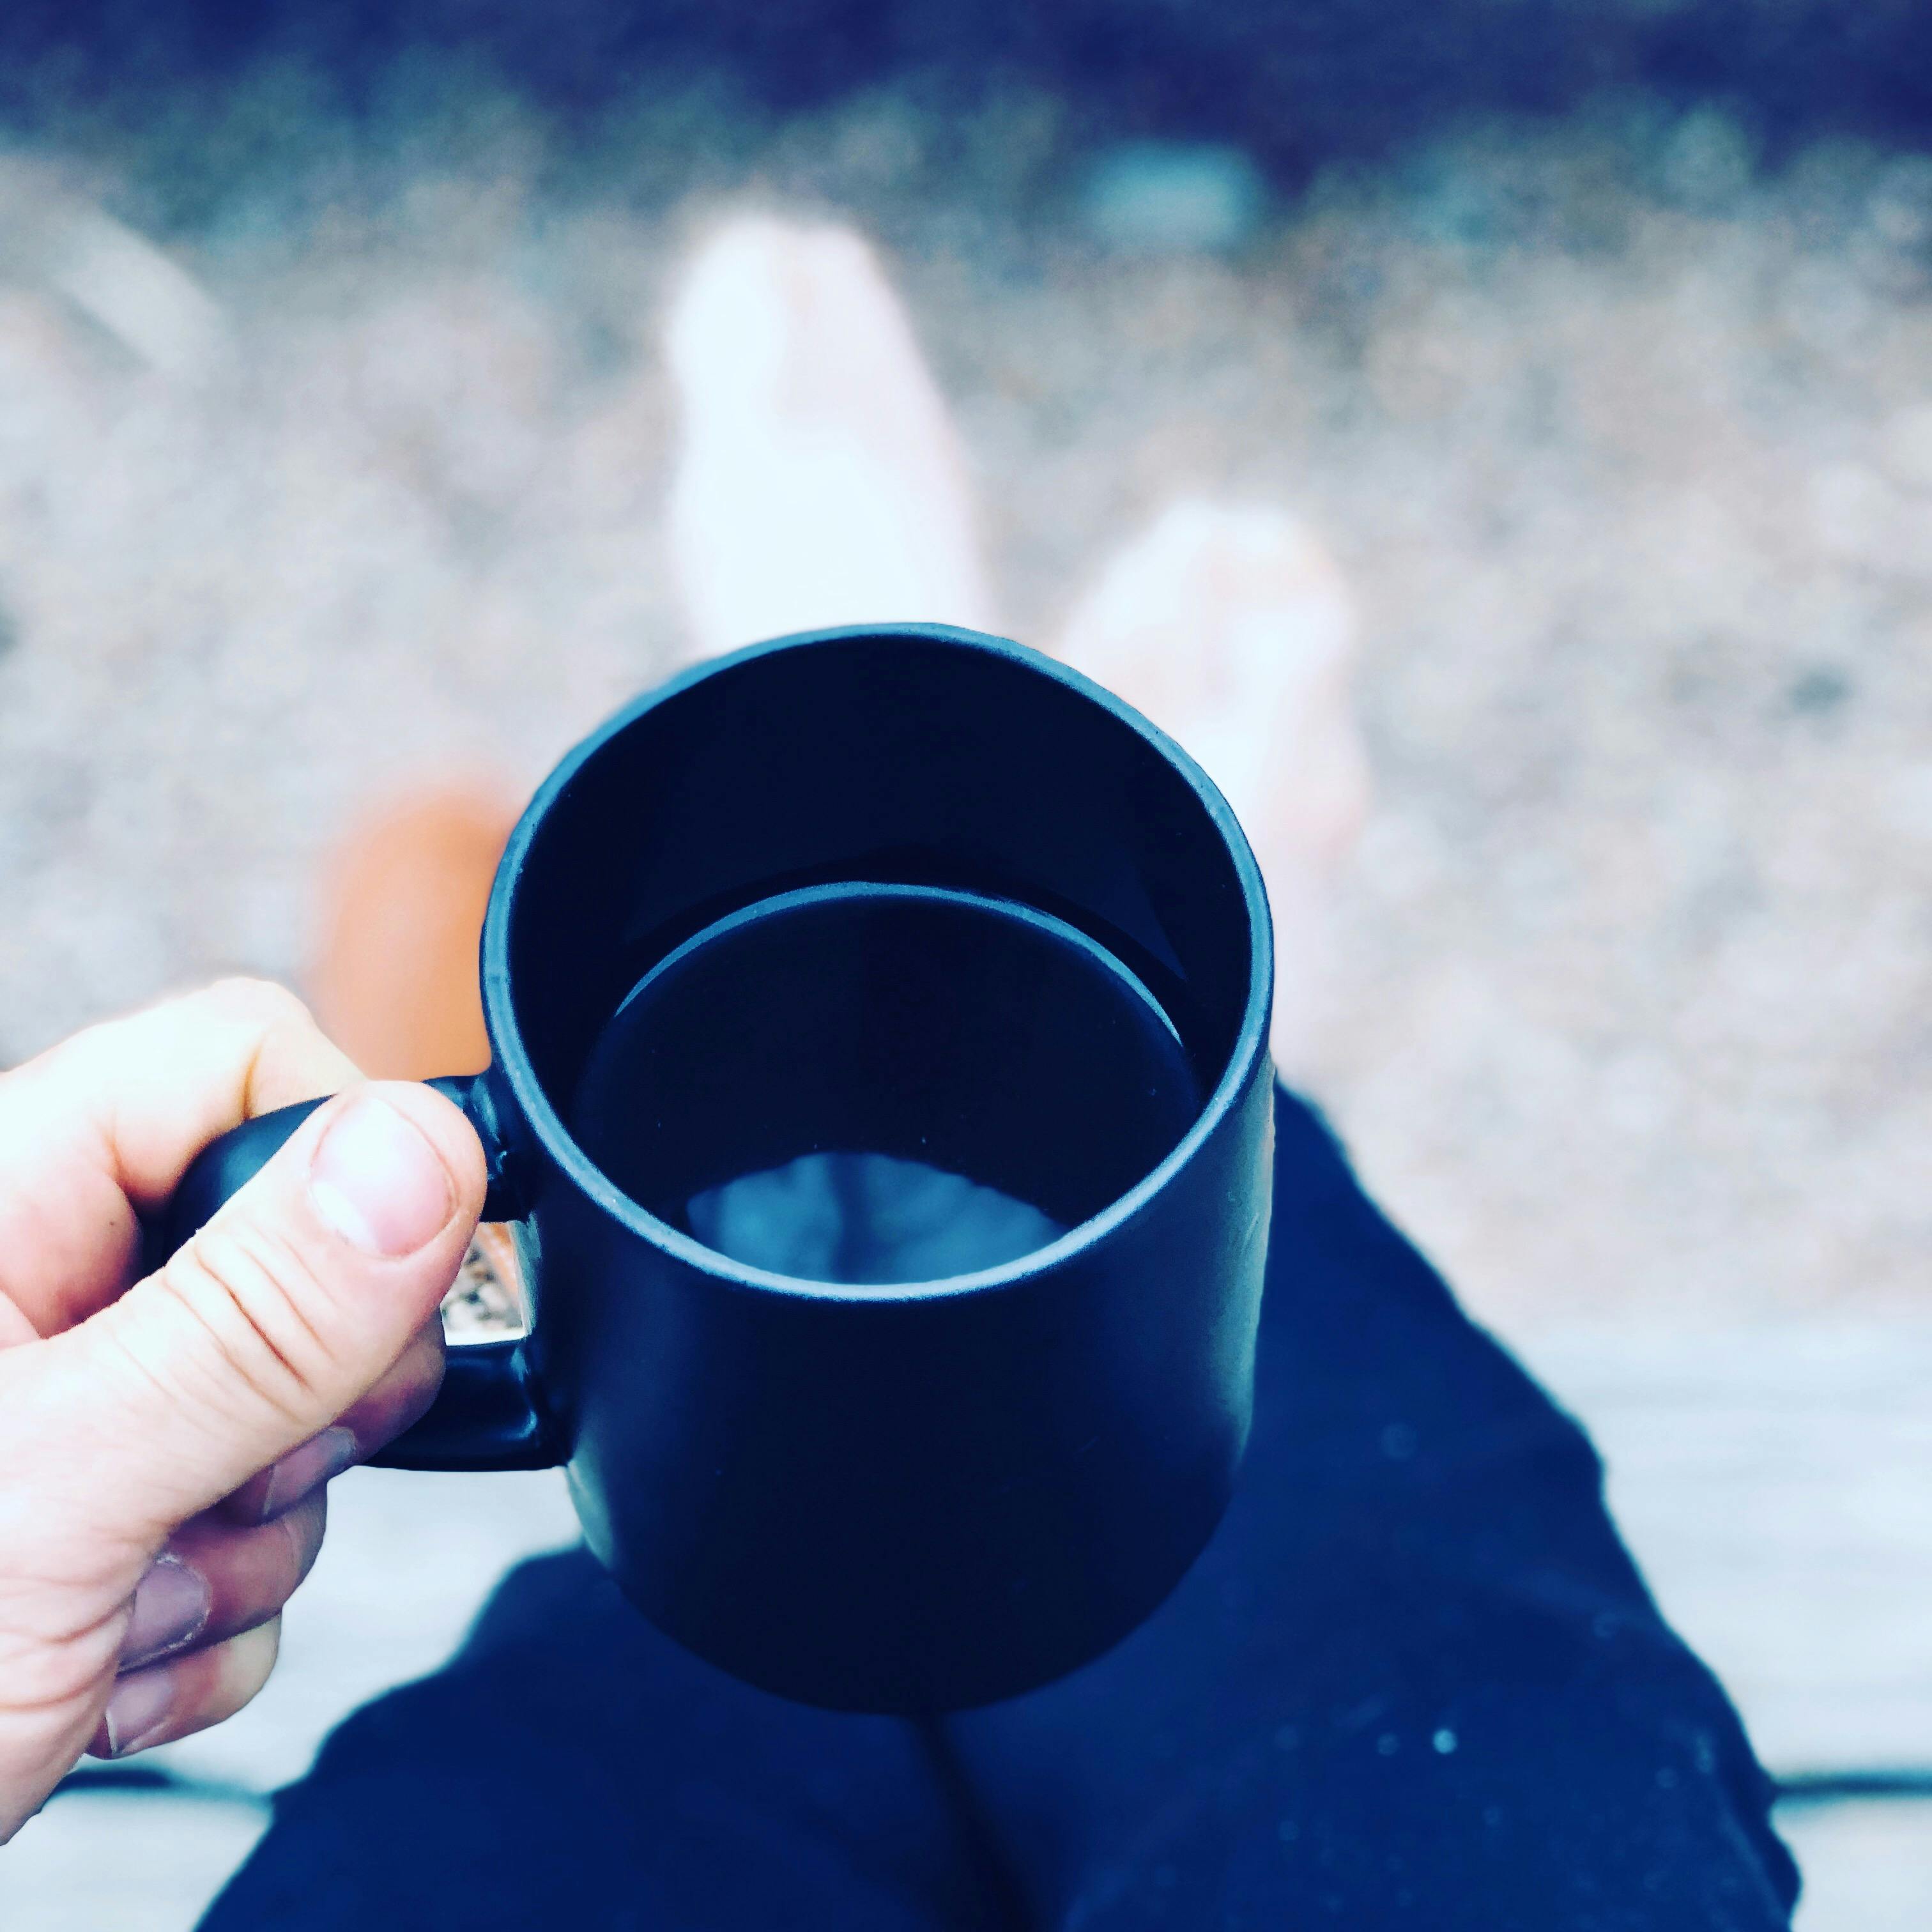 Free stock photo of black coffee, brewed coffee, coffee cup